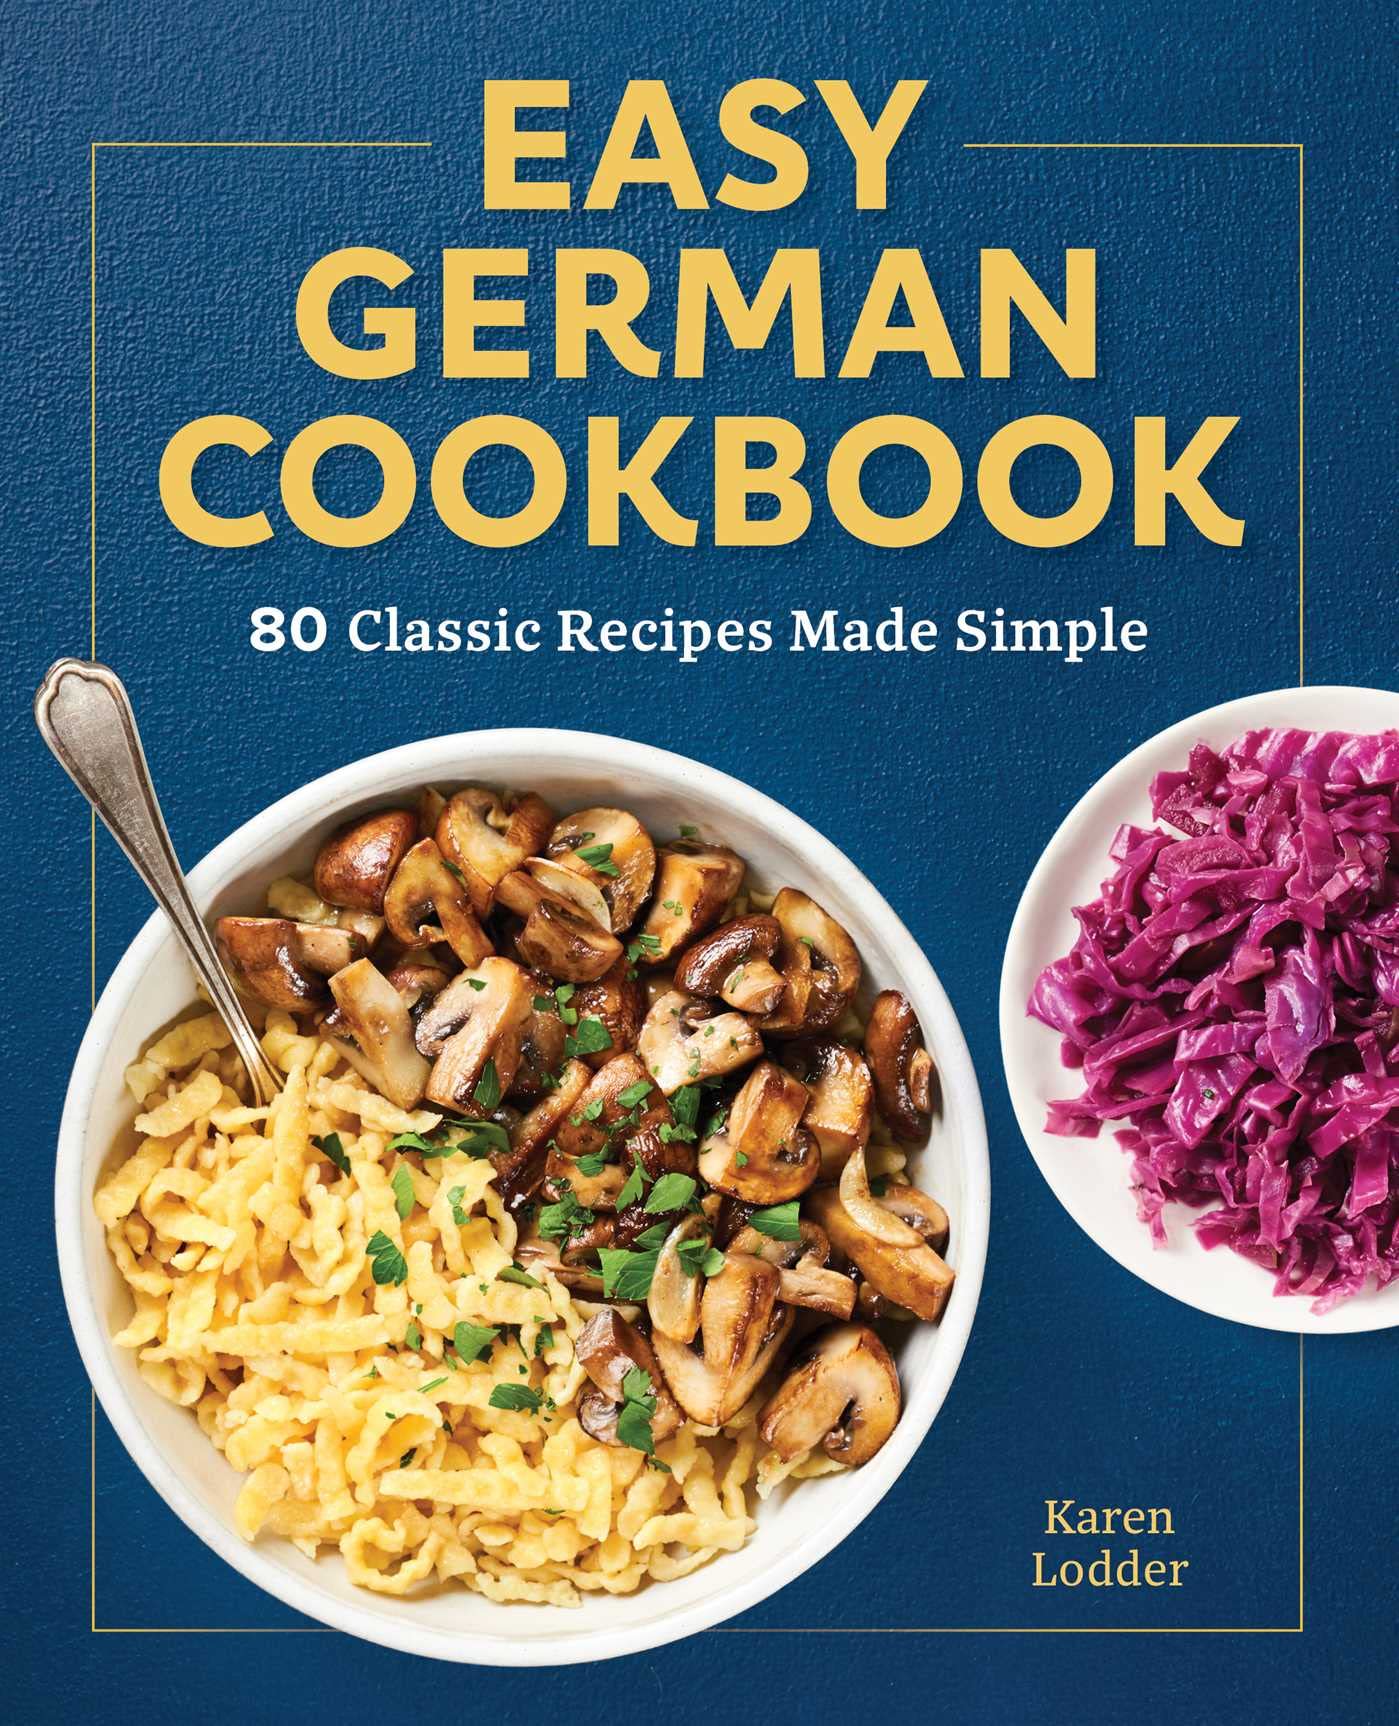 Easy German Cookbook: 80 Classic Recipes Made Simple (Karen Lodder)